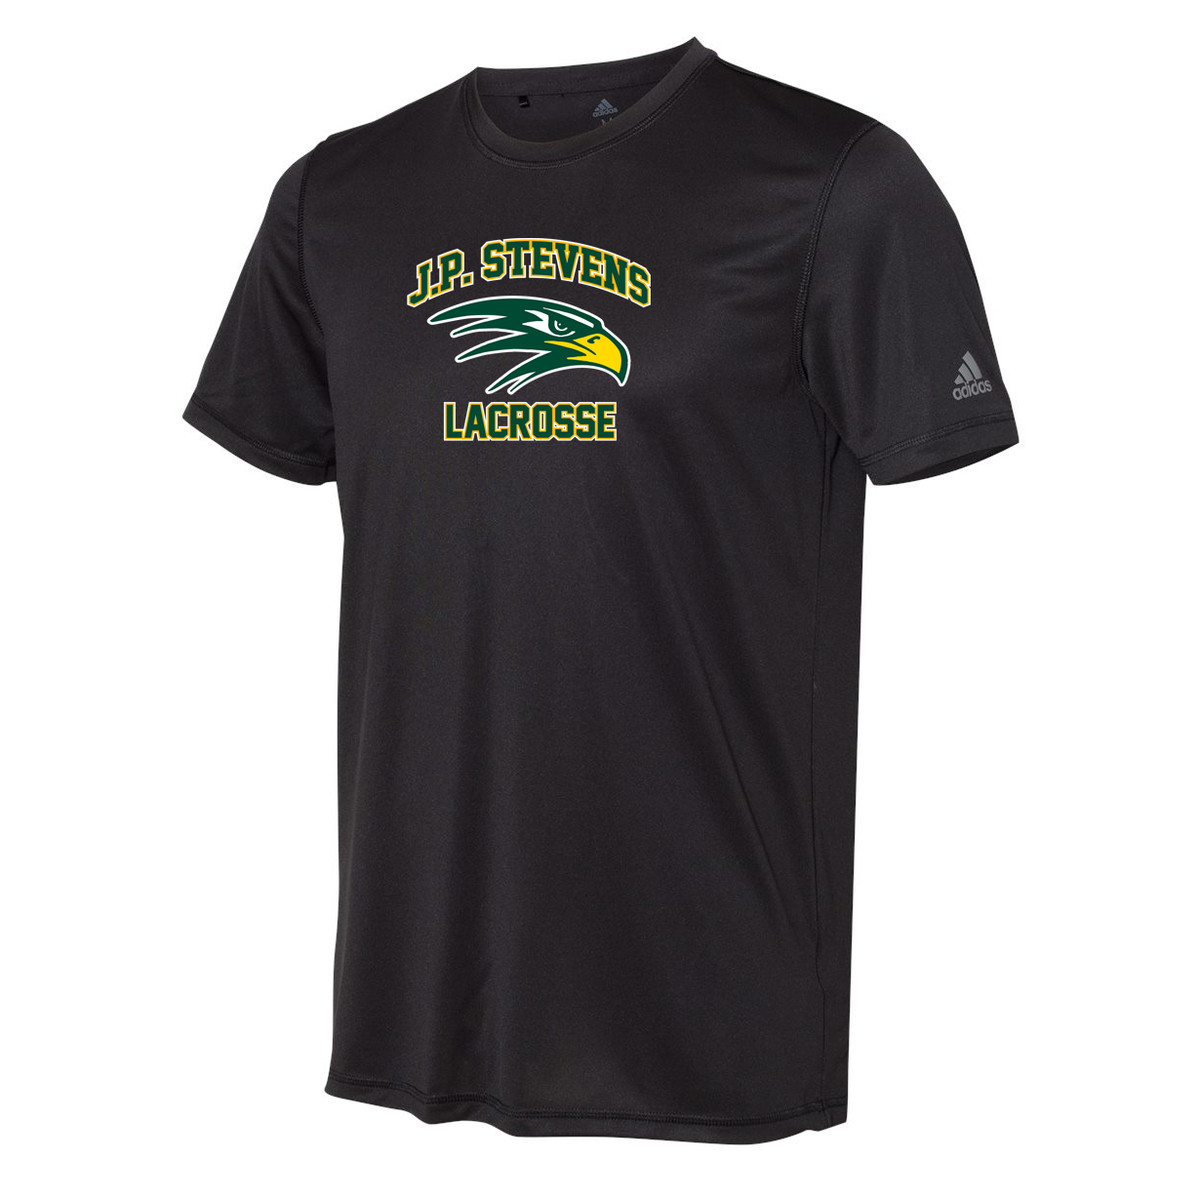 J.P. Stevens Lacrosse Adidas Sport T-Shirt